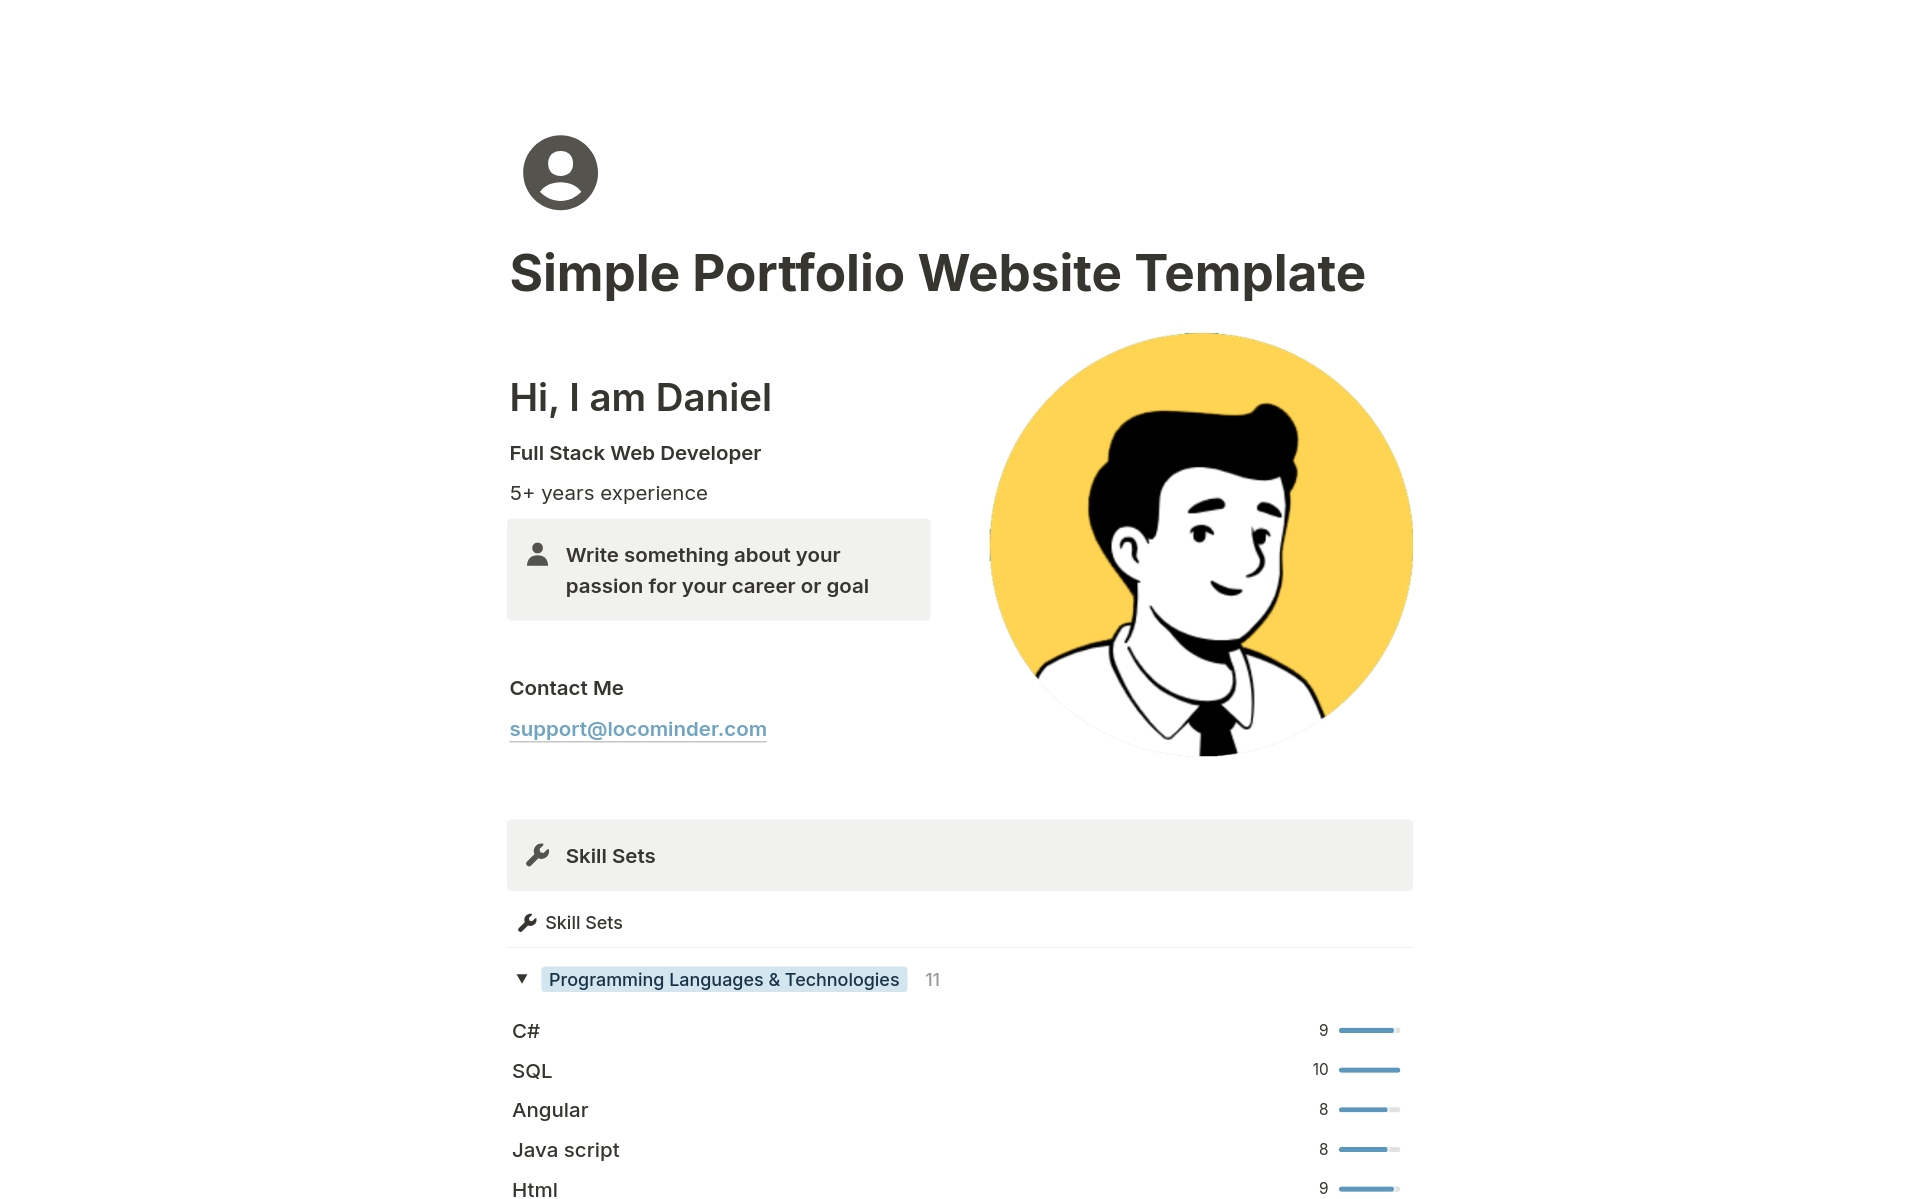 Presenting the Notion Simple Portfolio Website Template